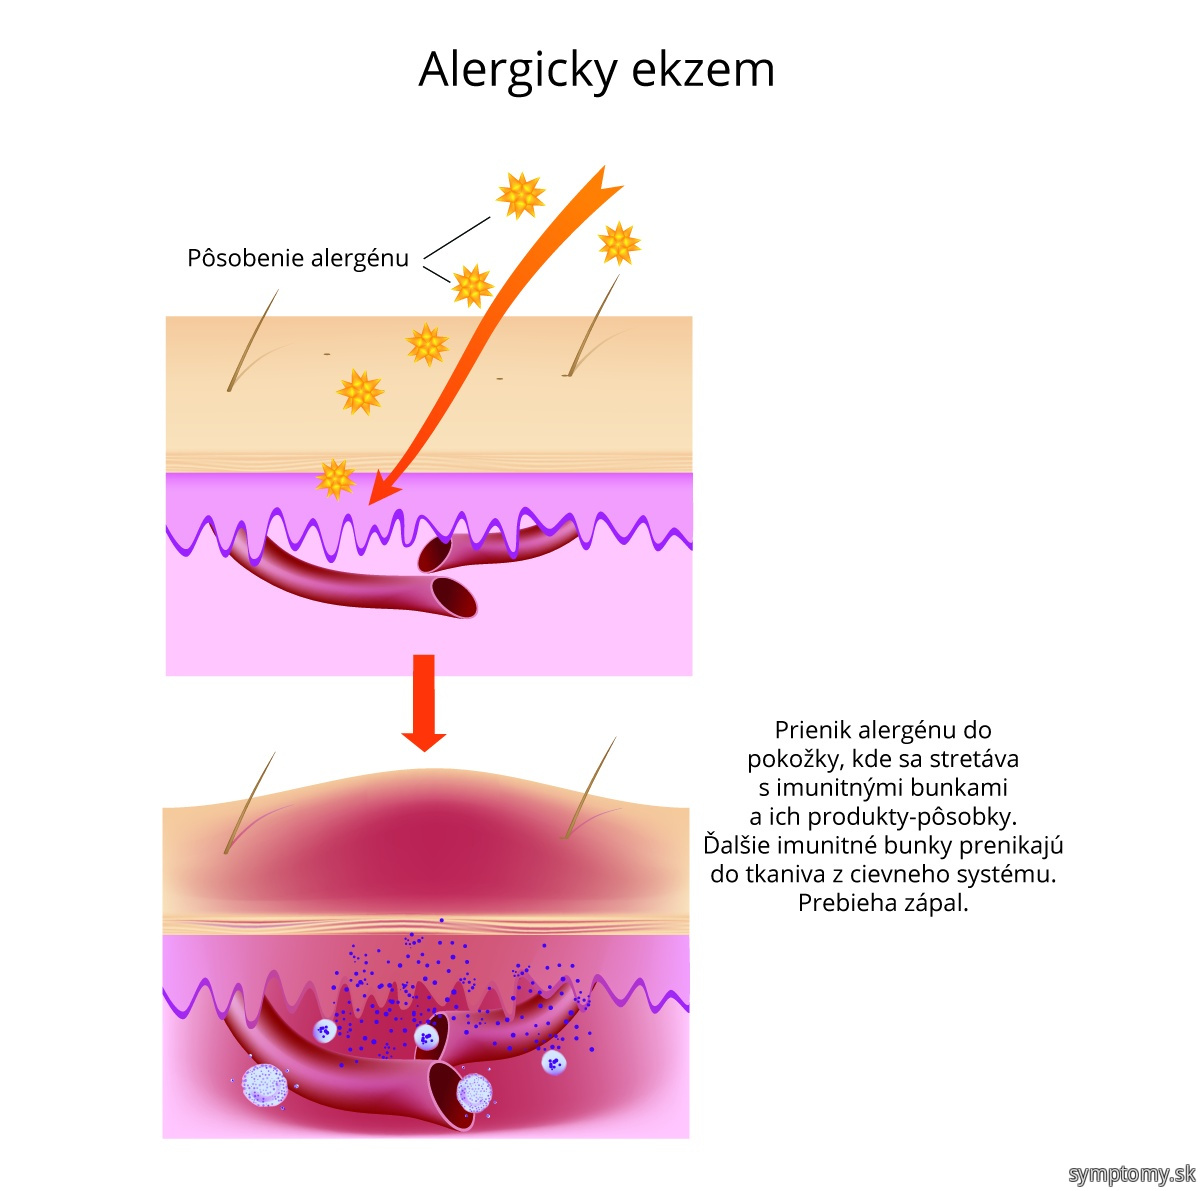 Alergicky ekzem